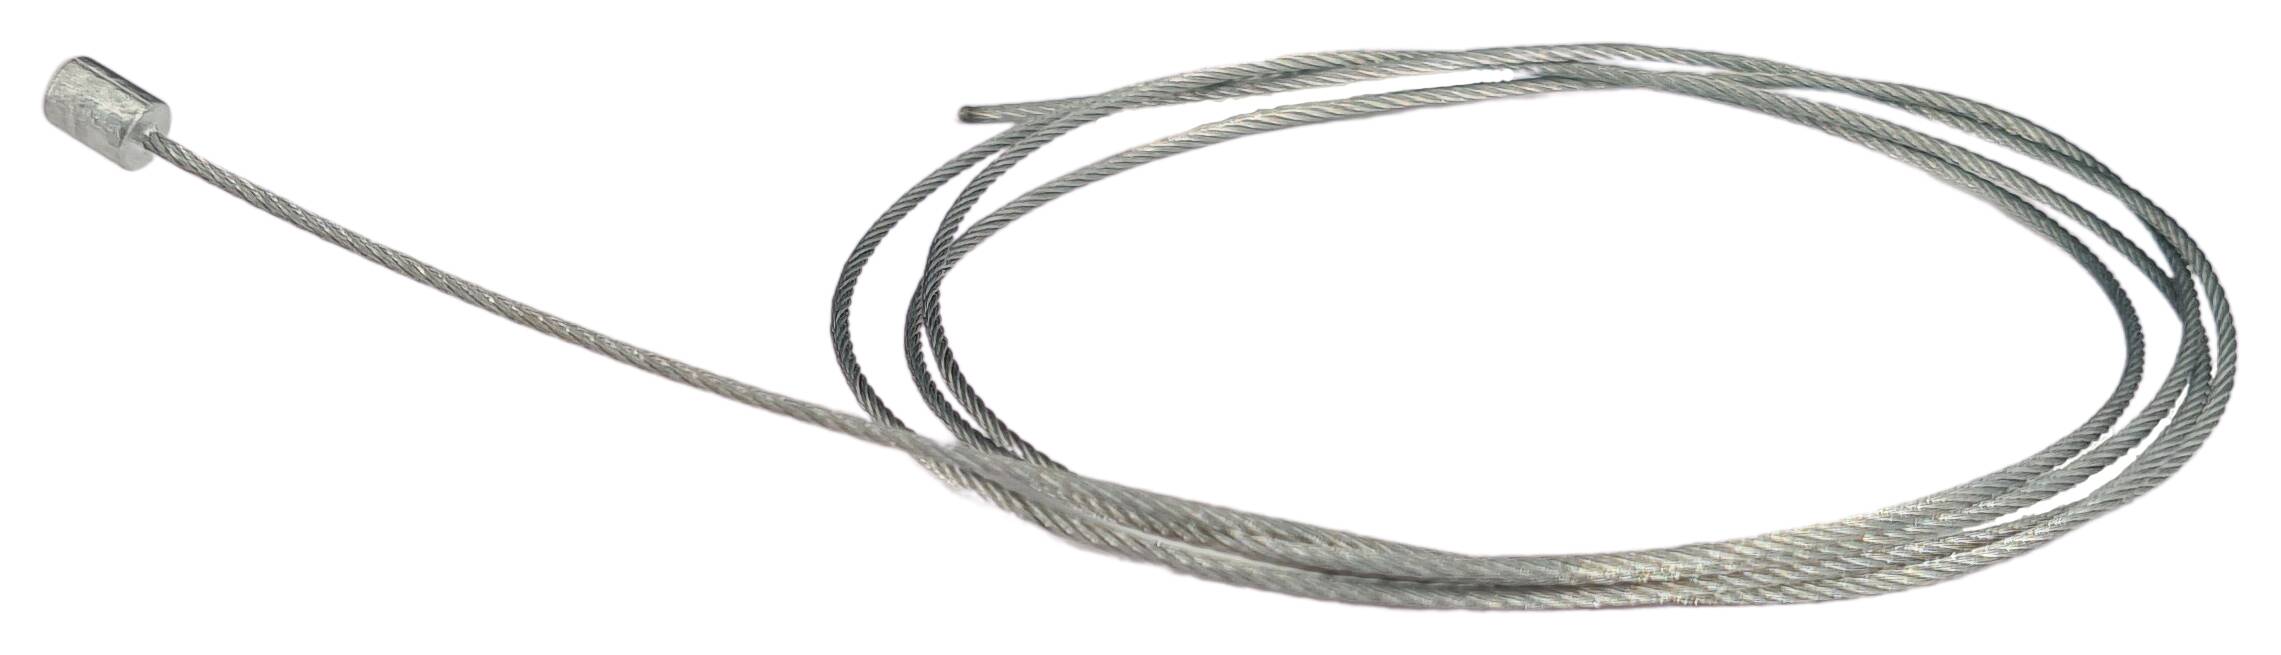 Stahlseil-Abschnitt Ø 1,2x1000 mm (7x7) einseitig m. zyld. Nippel 4,5x6 mm verzinkt